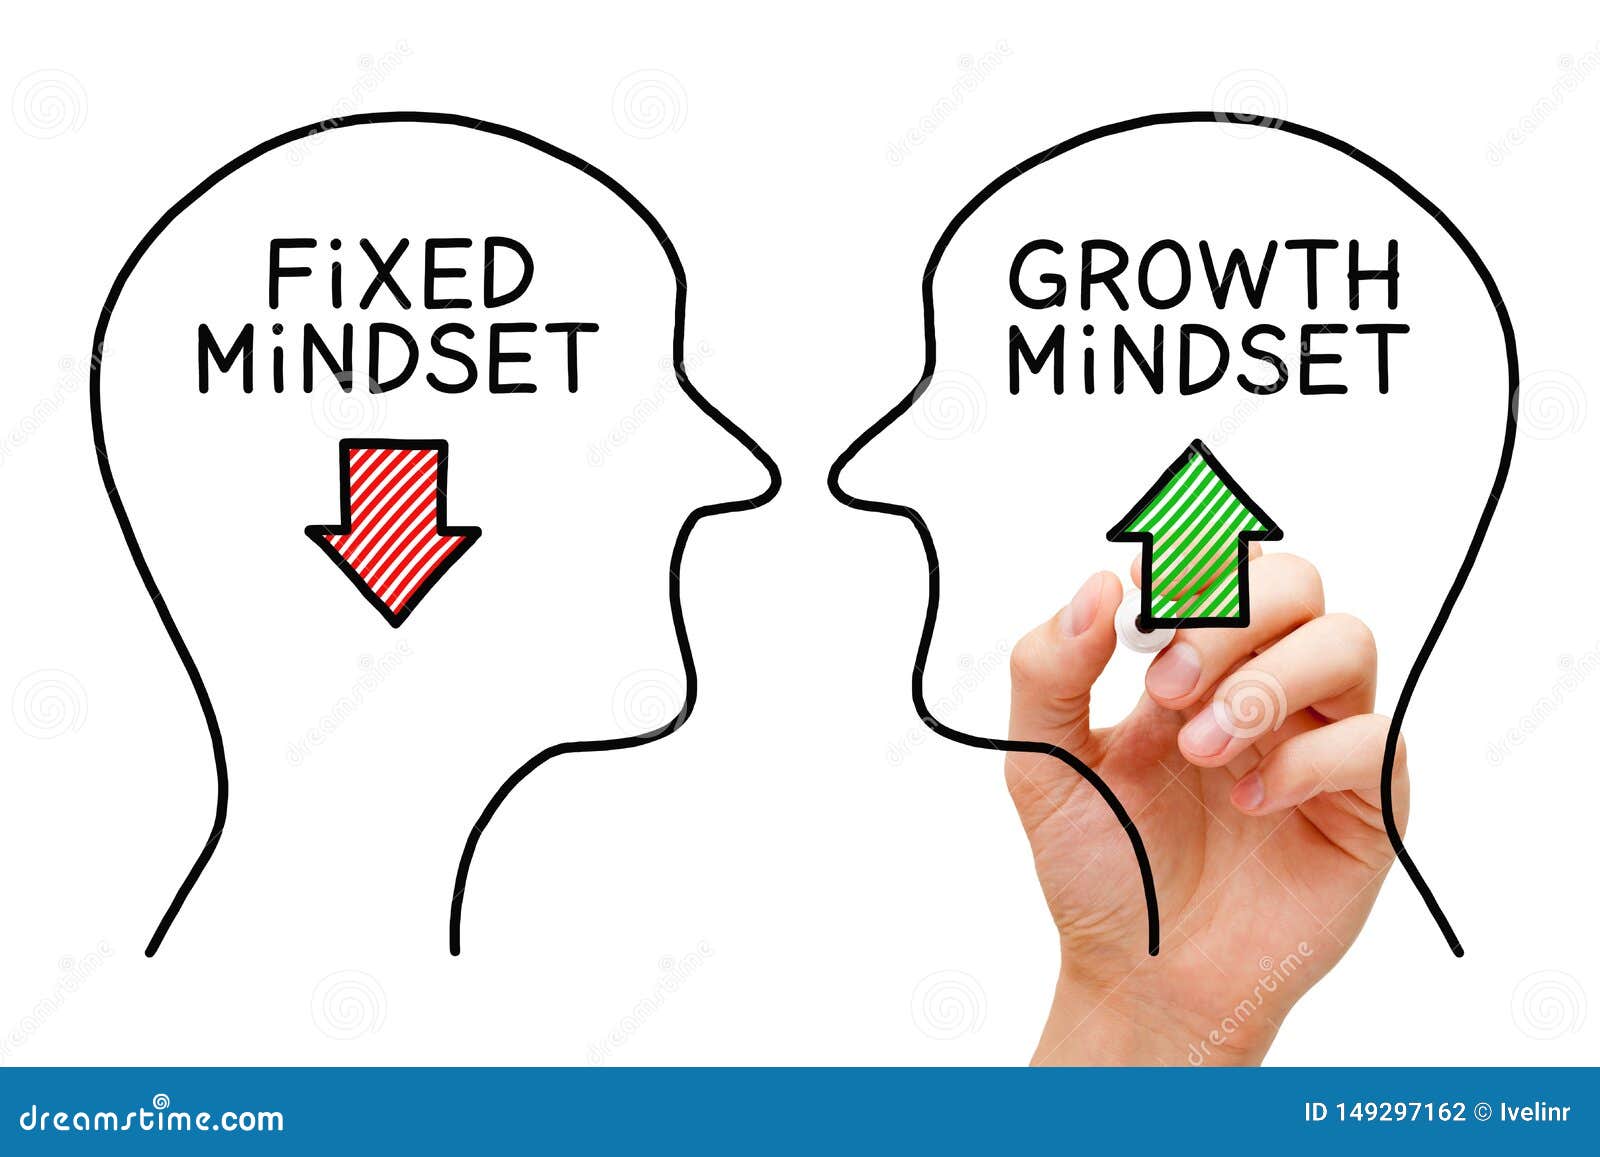 fixed mindset vs growth mindset concept